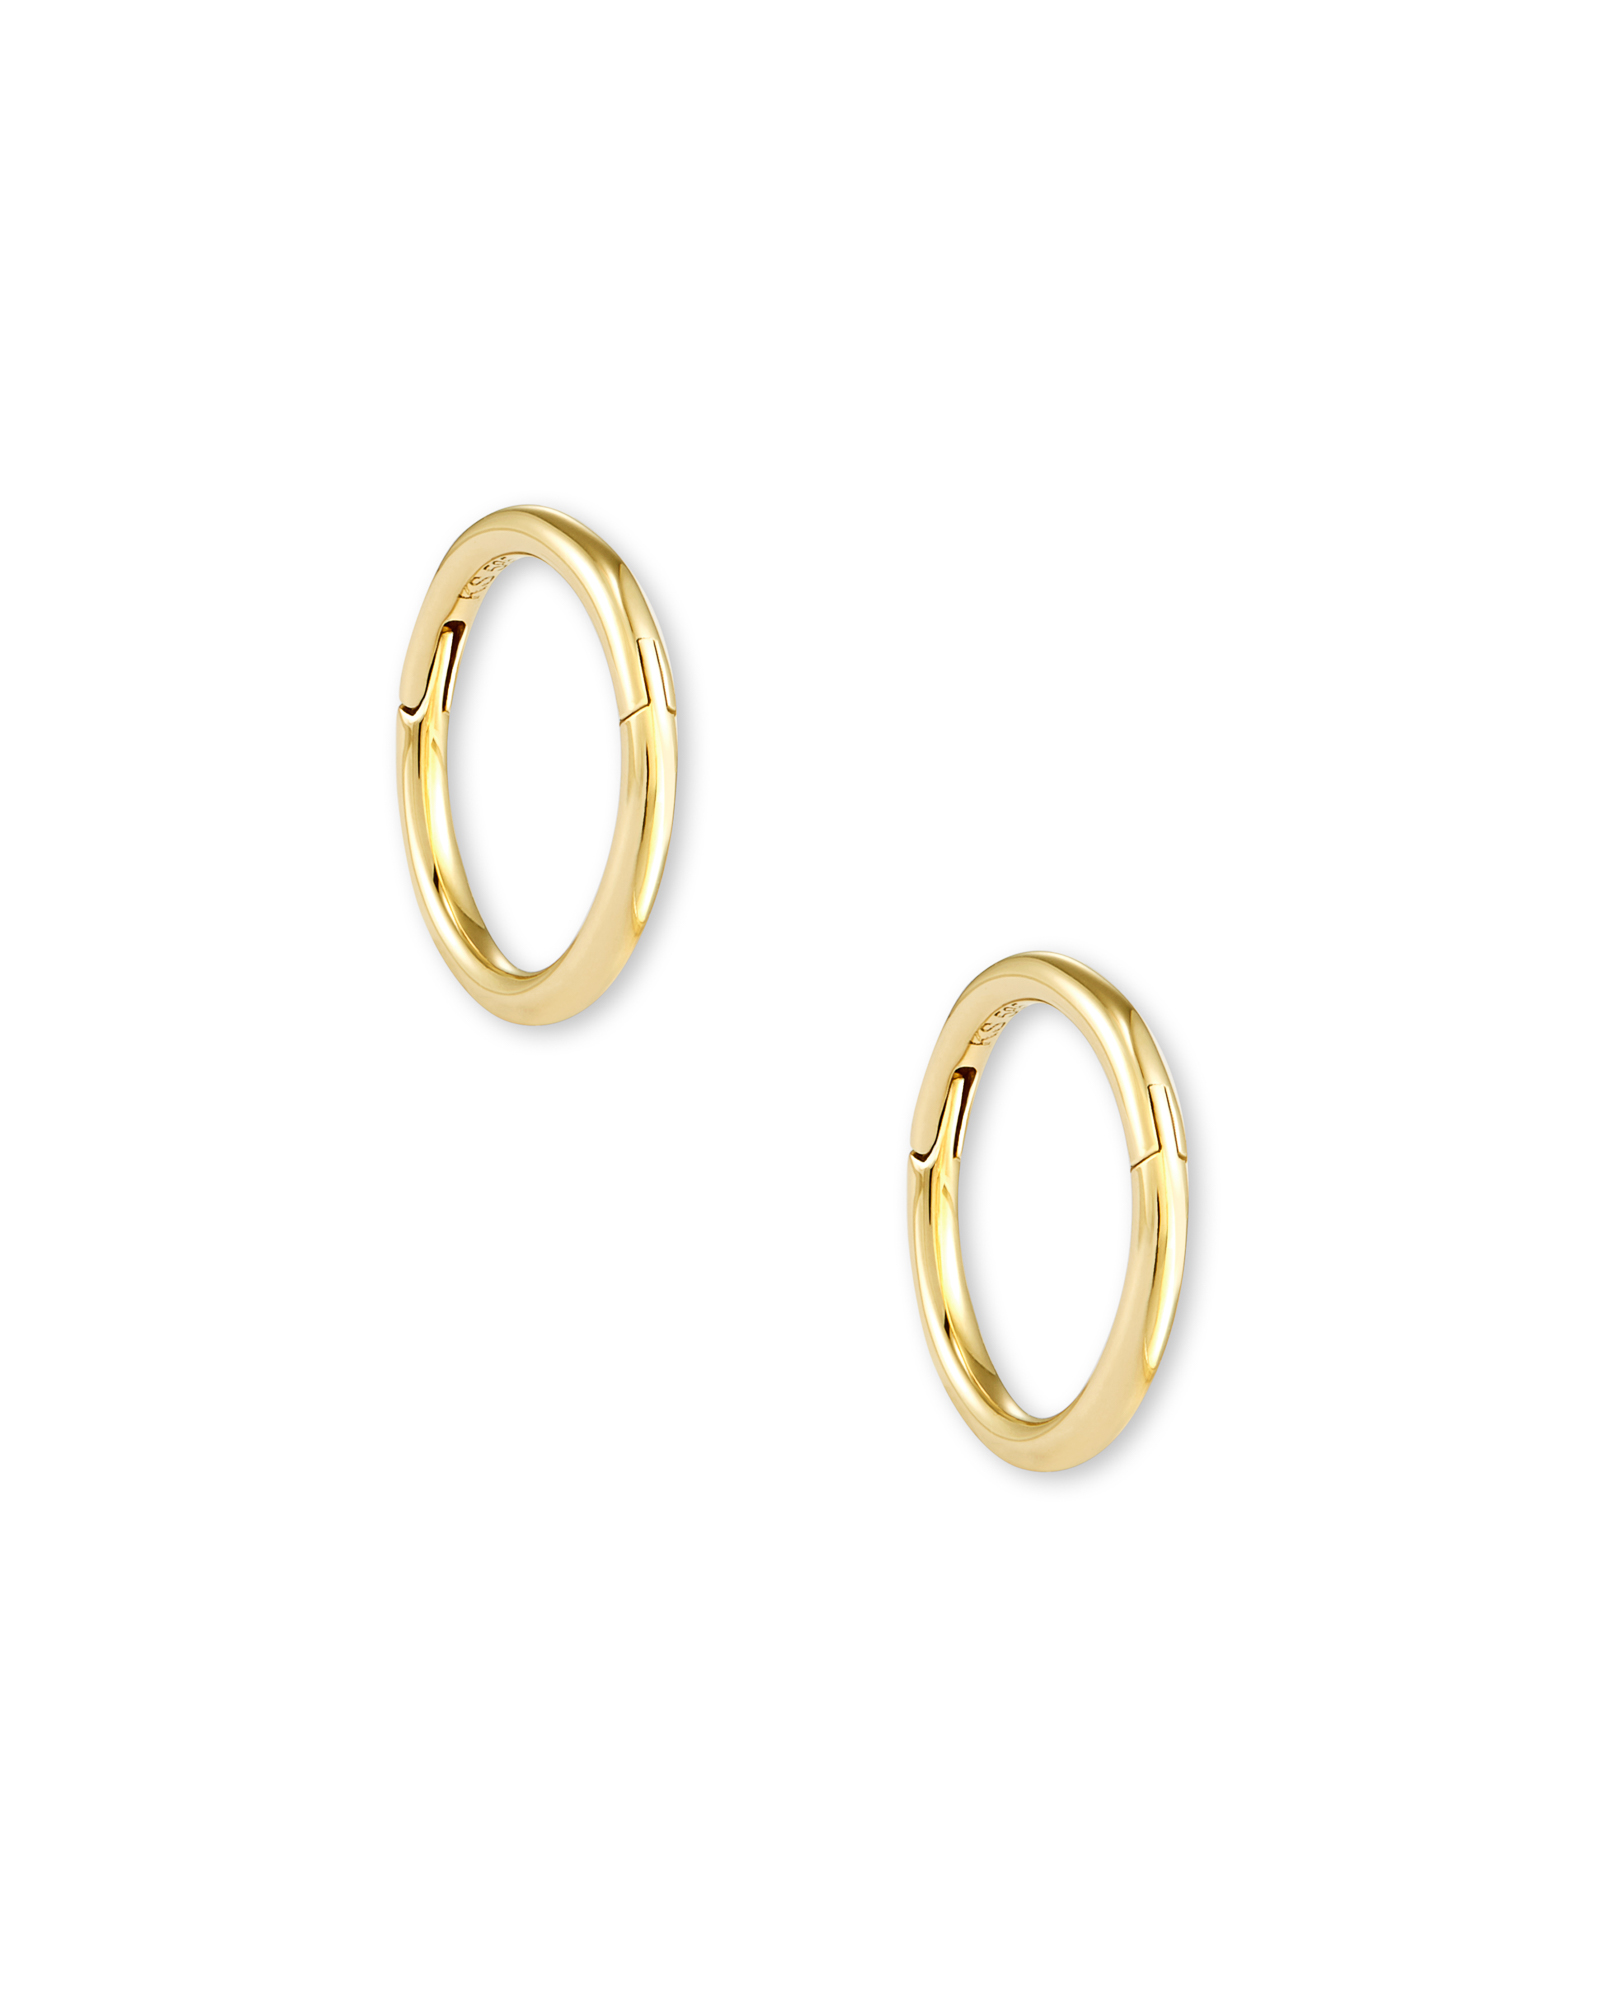 Gina Seamless Huggie Earrings in 14k Yellow Gold | Kendra Scott